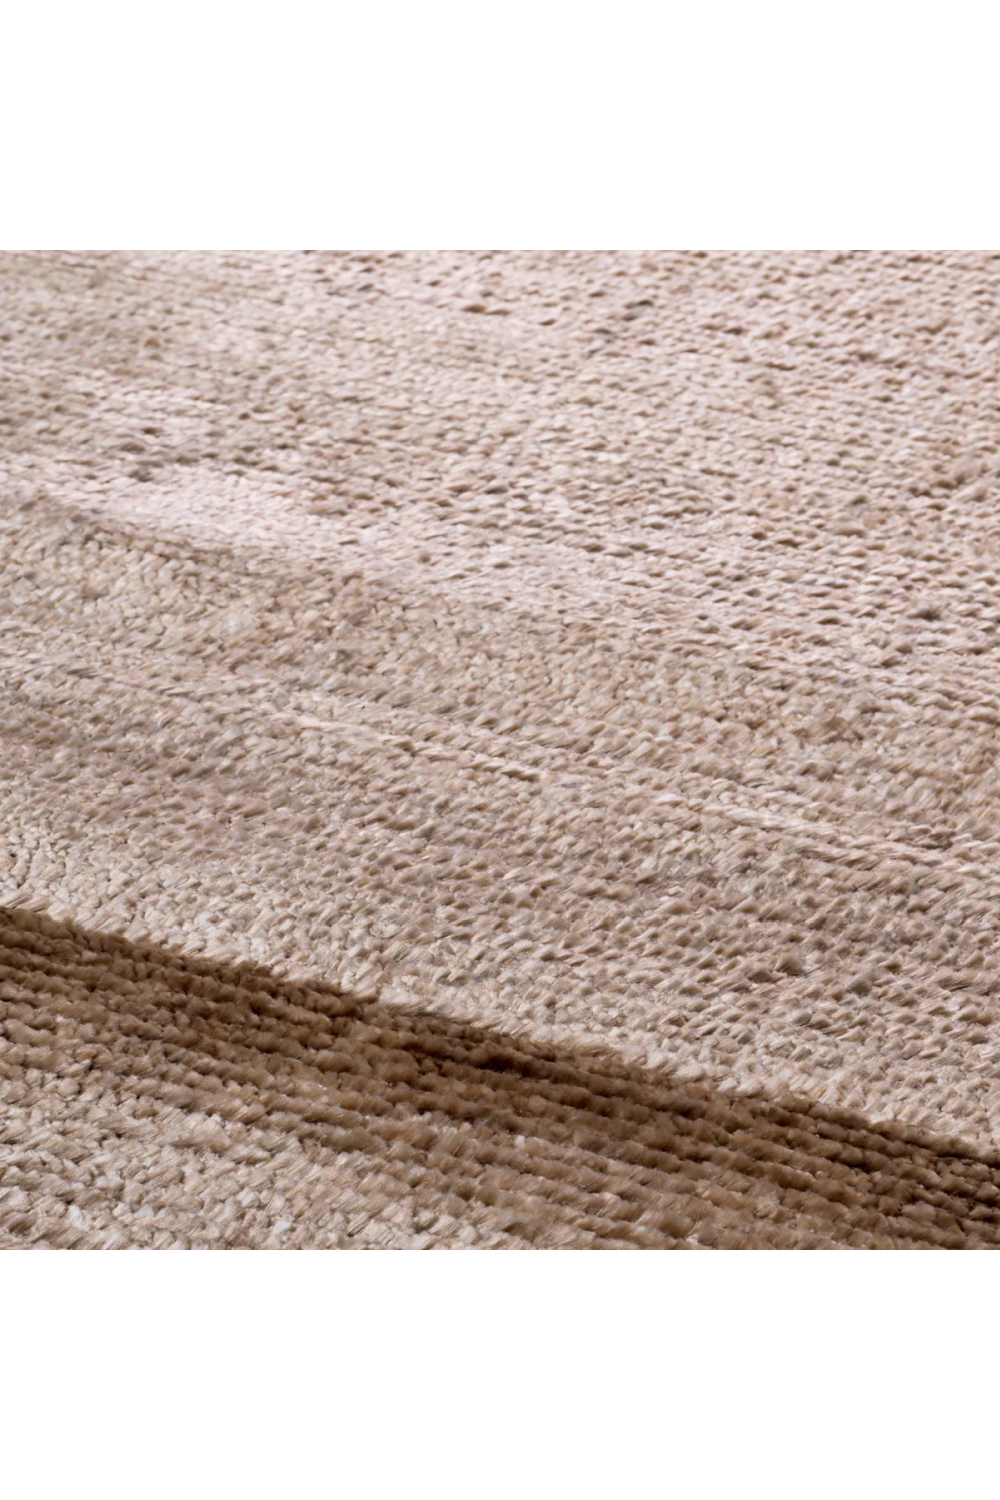 Brown Handwoven Silk Carpet | Eichholtz Asuri | Oroa.com